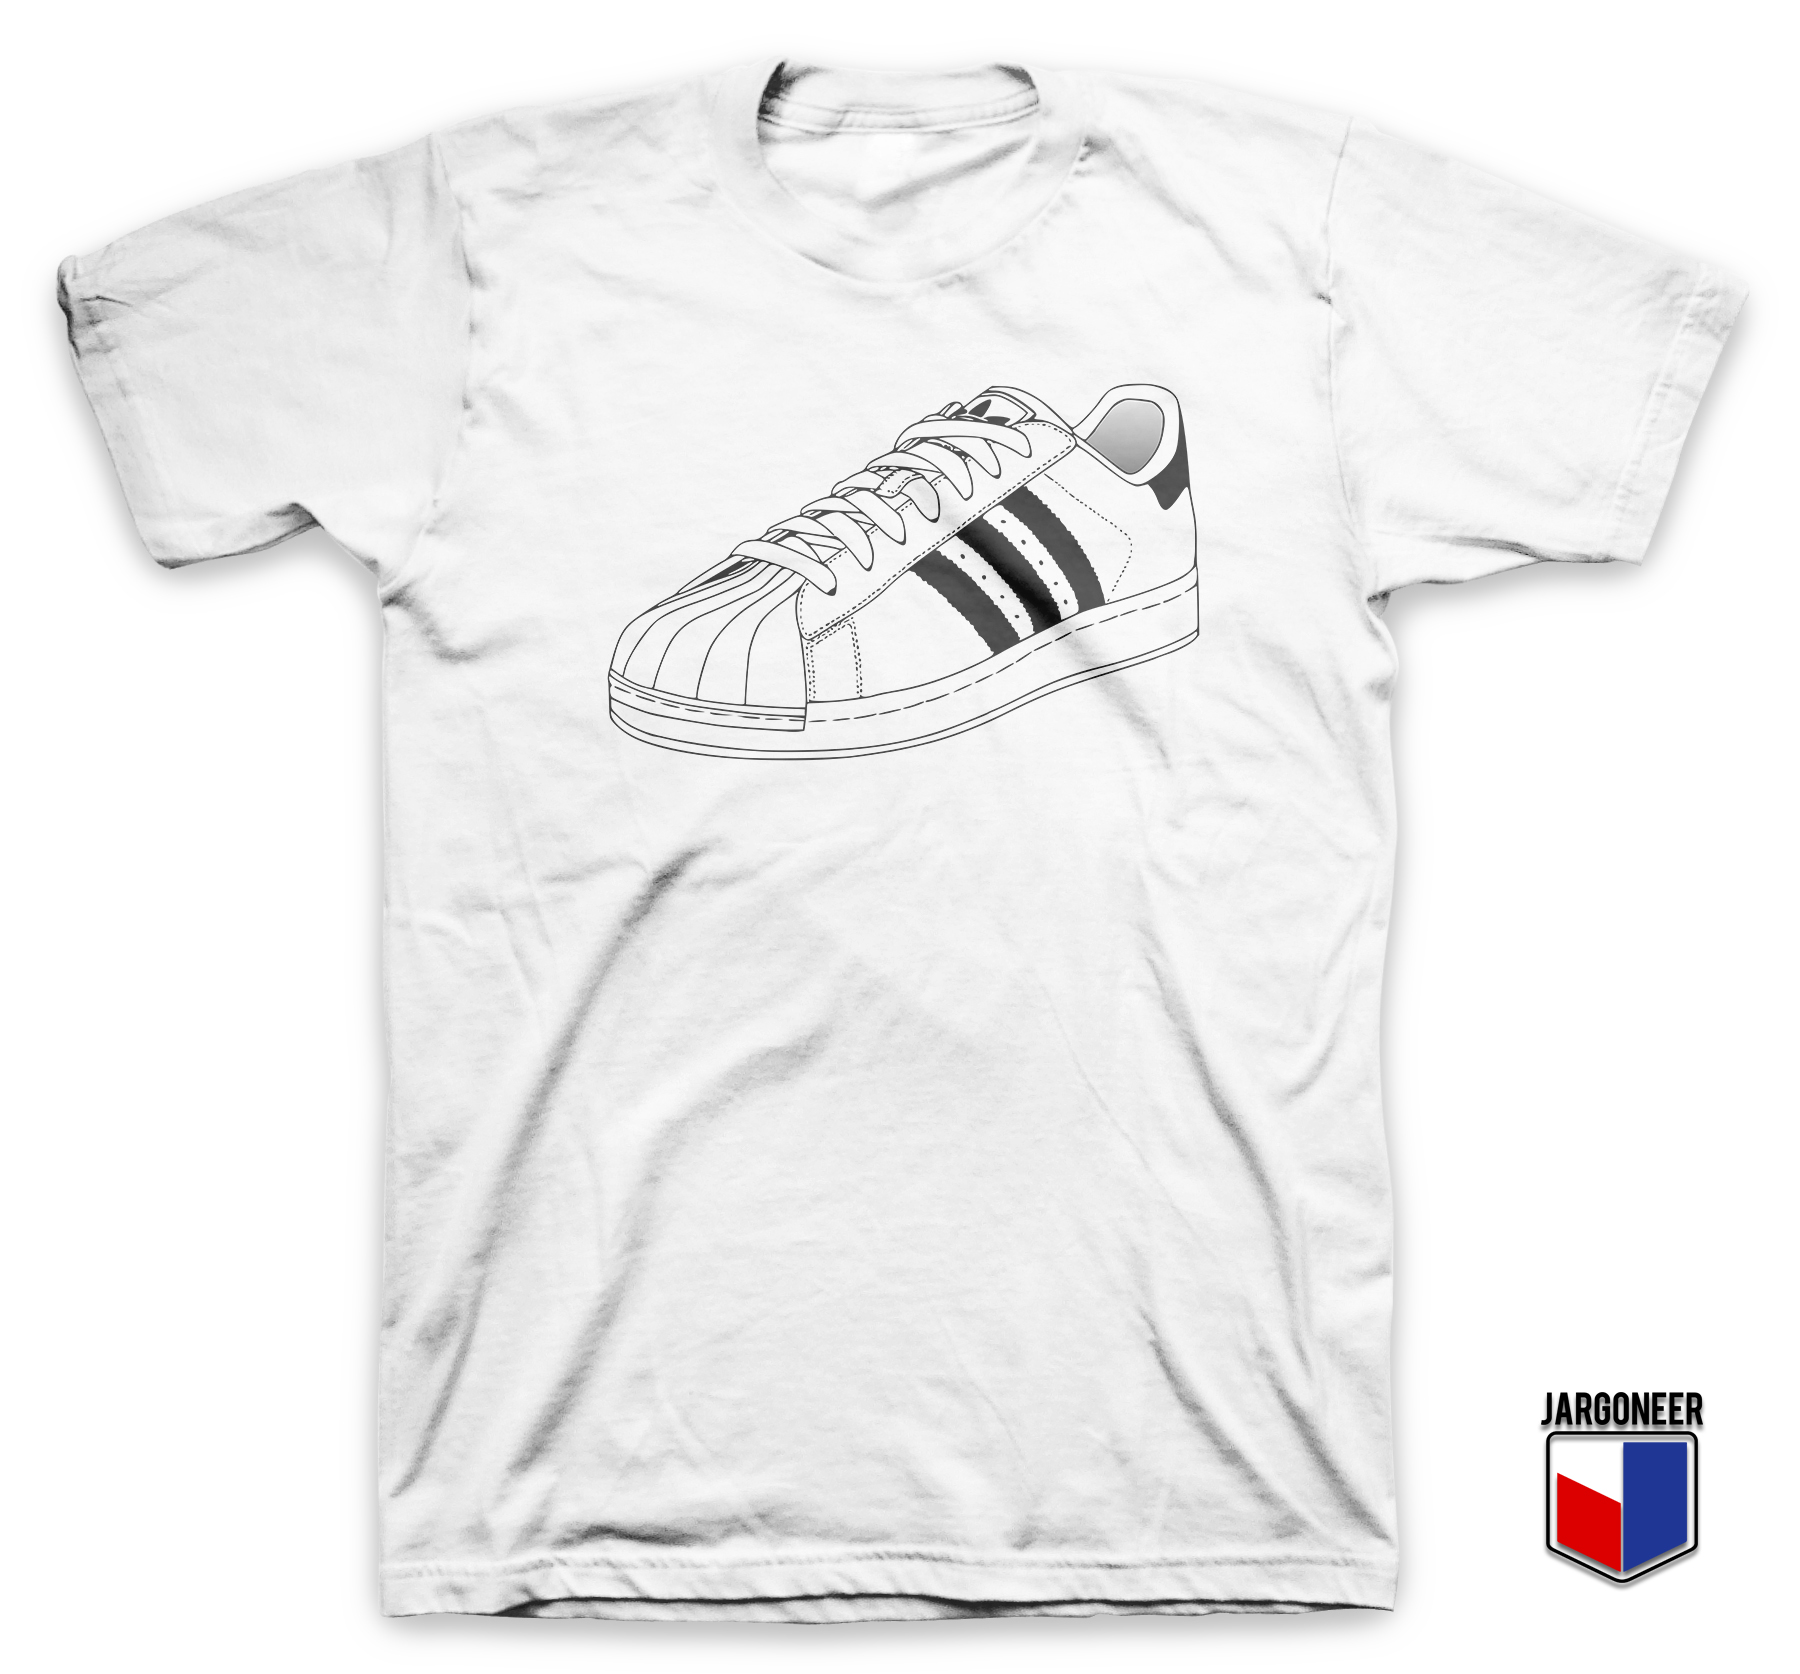 Three Stripes Superstar White T Shirt - Shop Unique Graphic Cool Shirt Designs